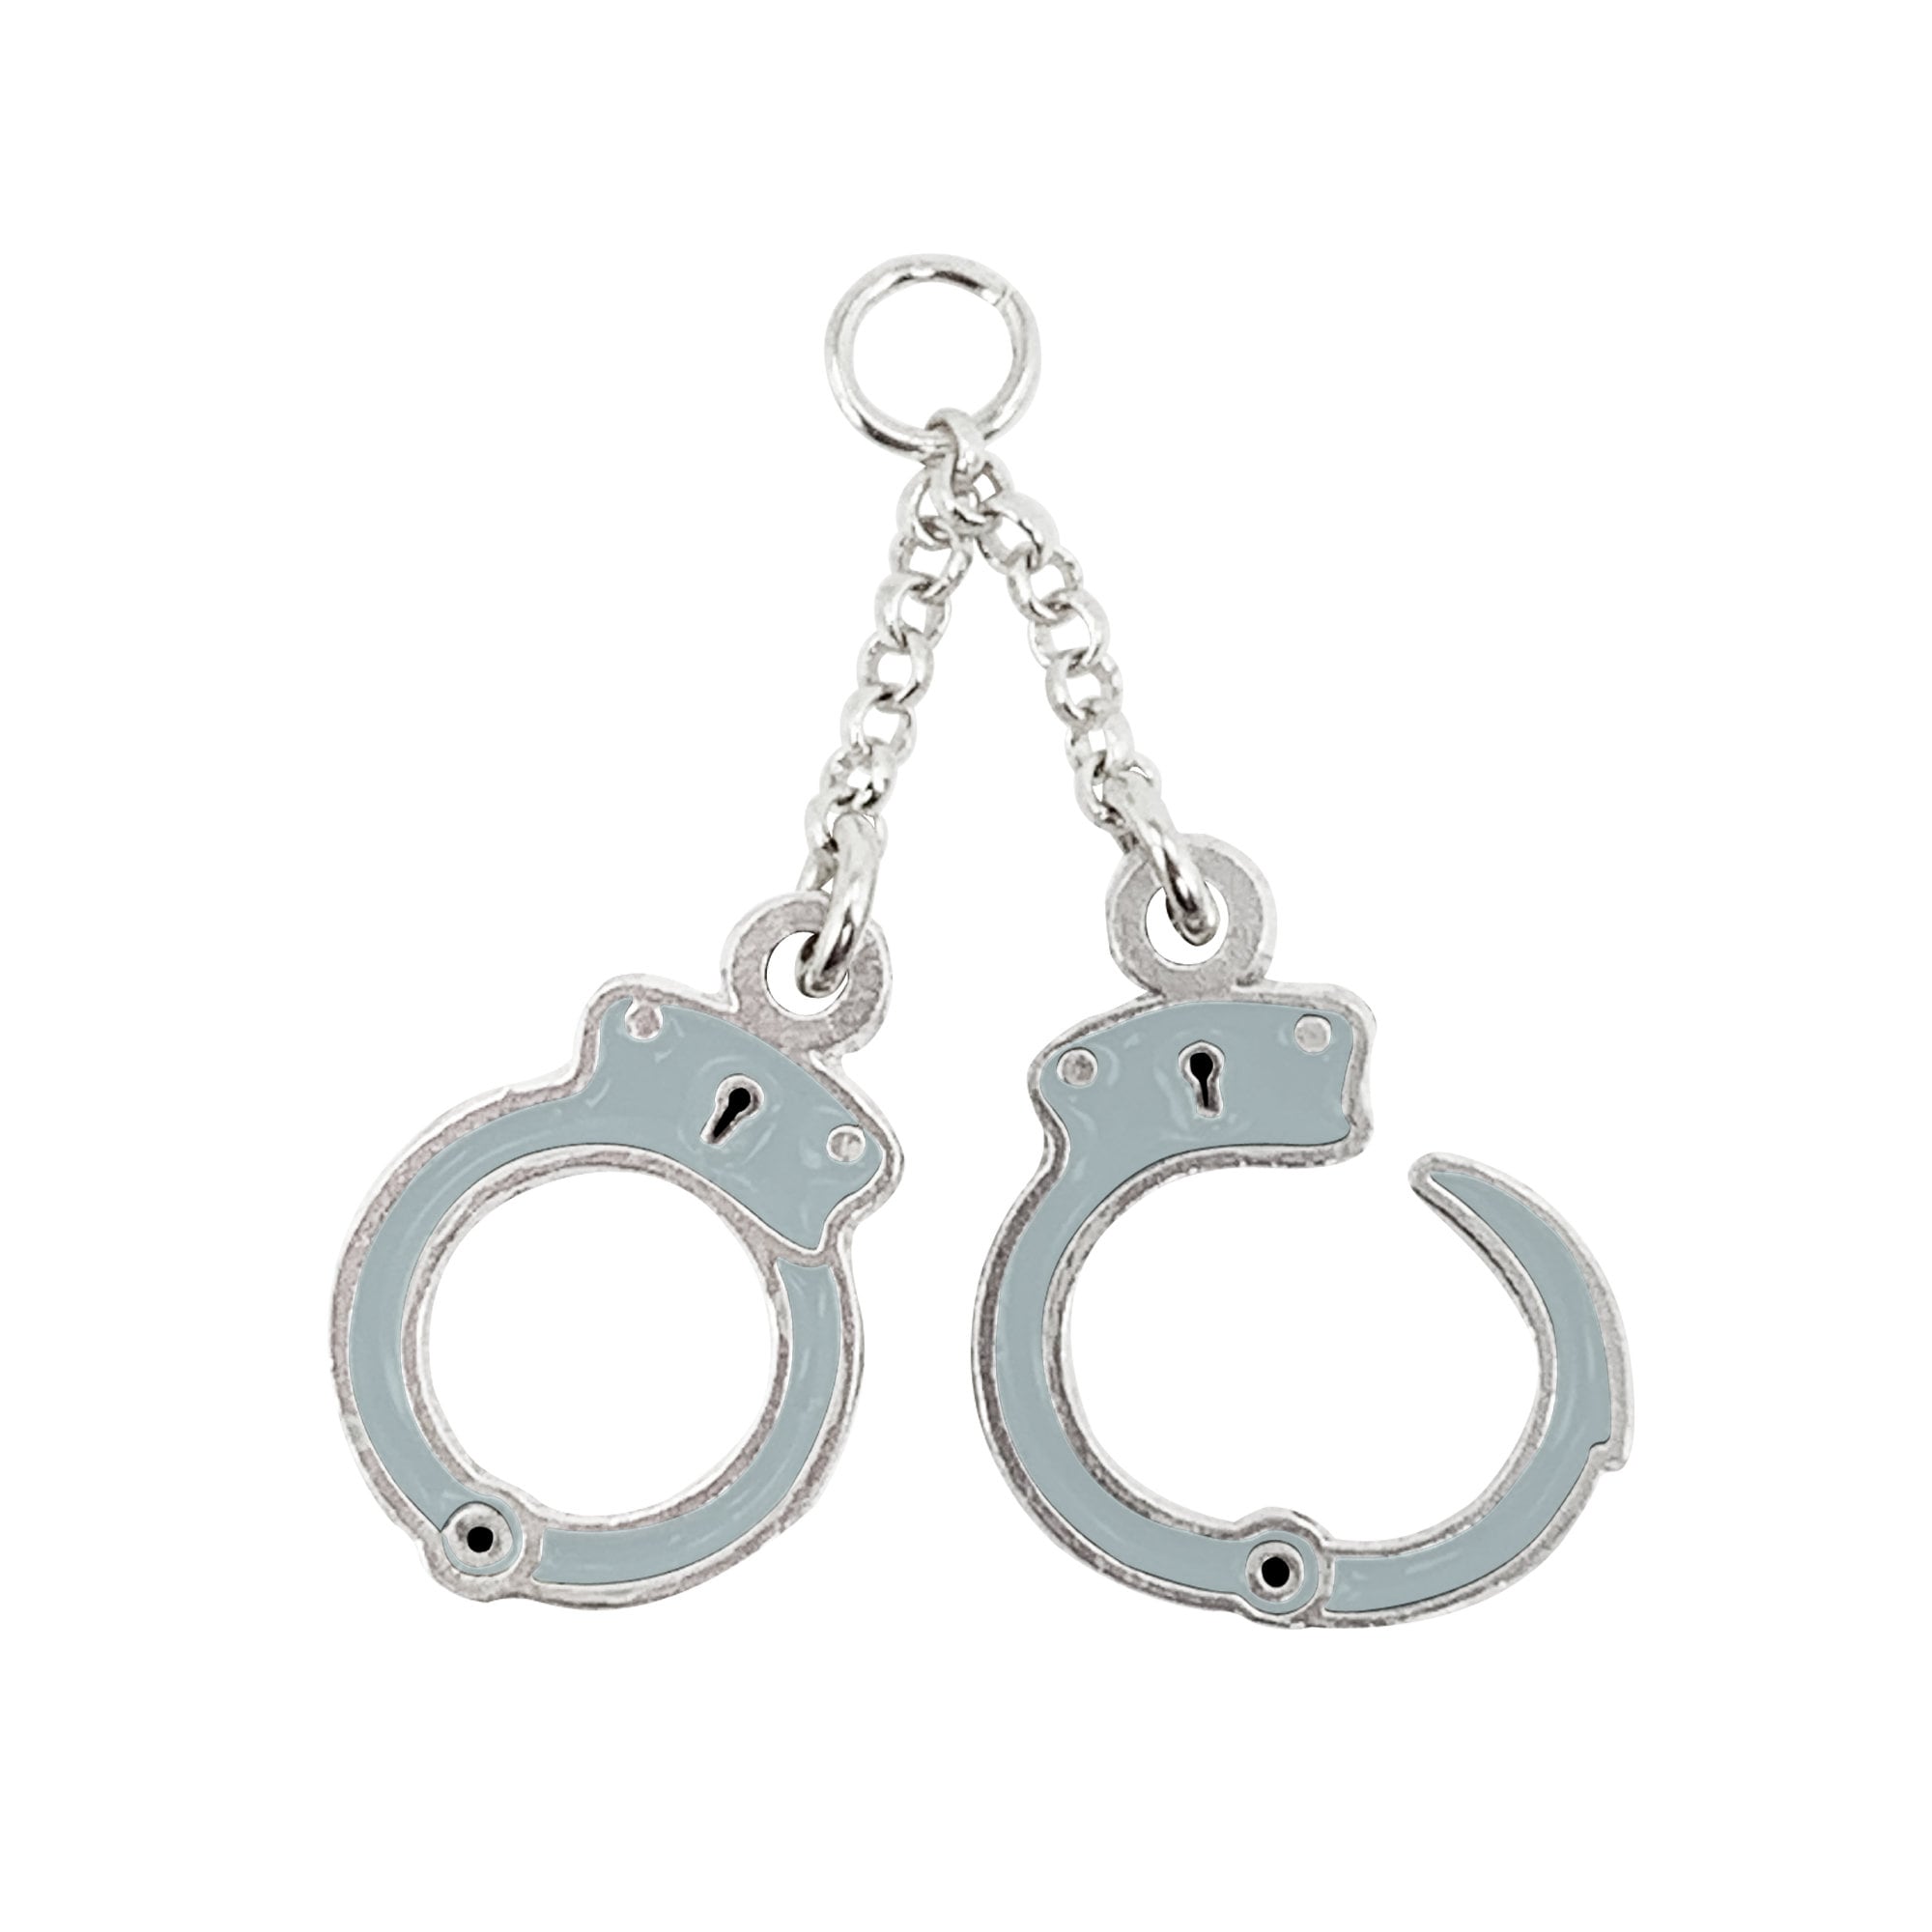 Buy Wintefei Fashion Men Mini Handcuff Charm Bracelet Multilayer Wax Rope Bangle  Jewelry Gift at Amazon.in